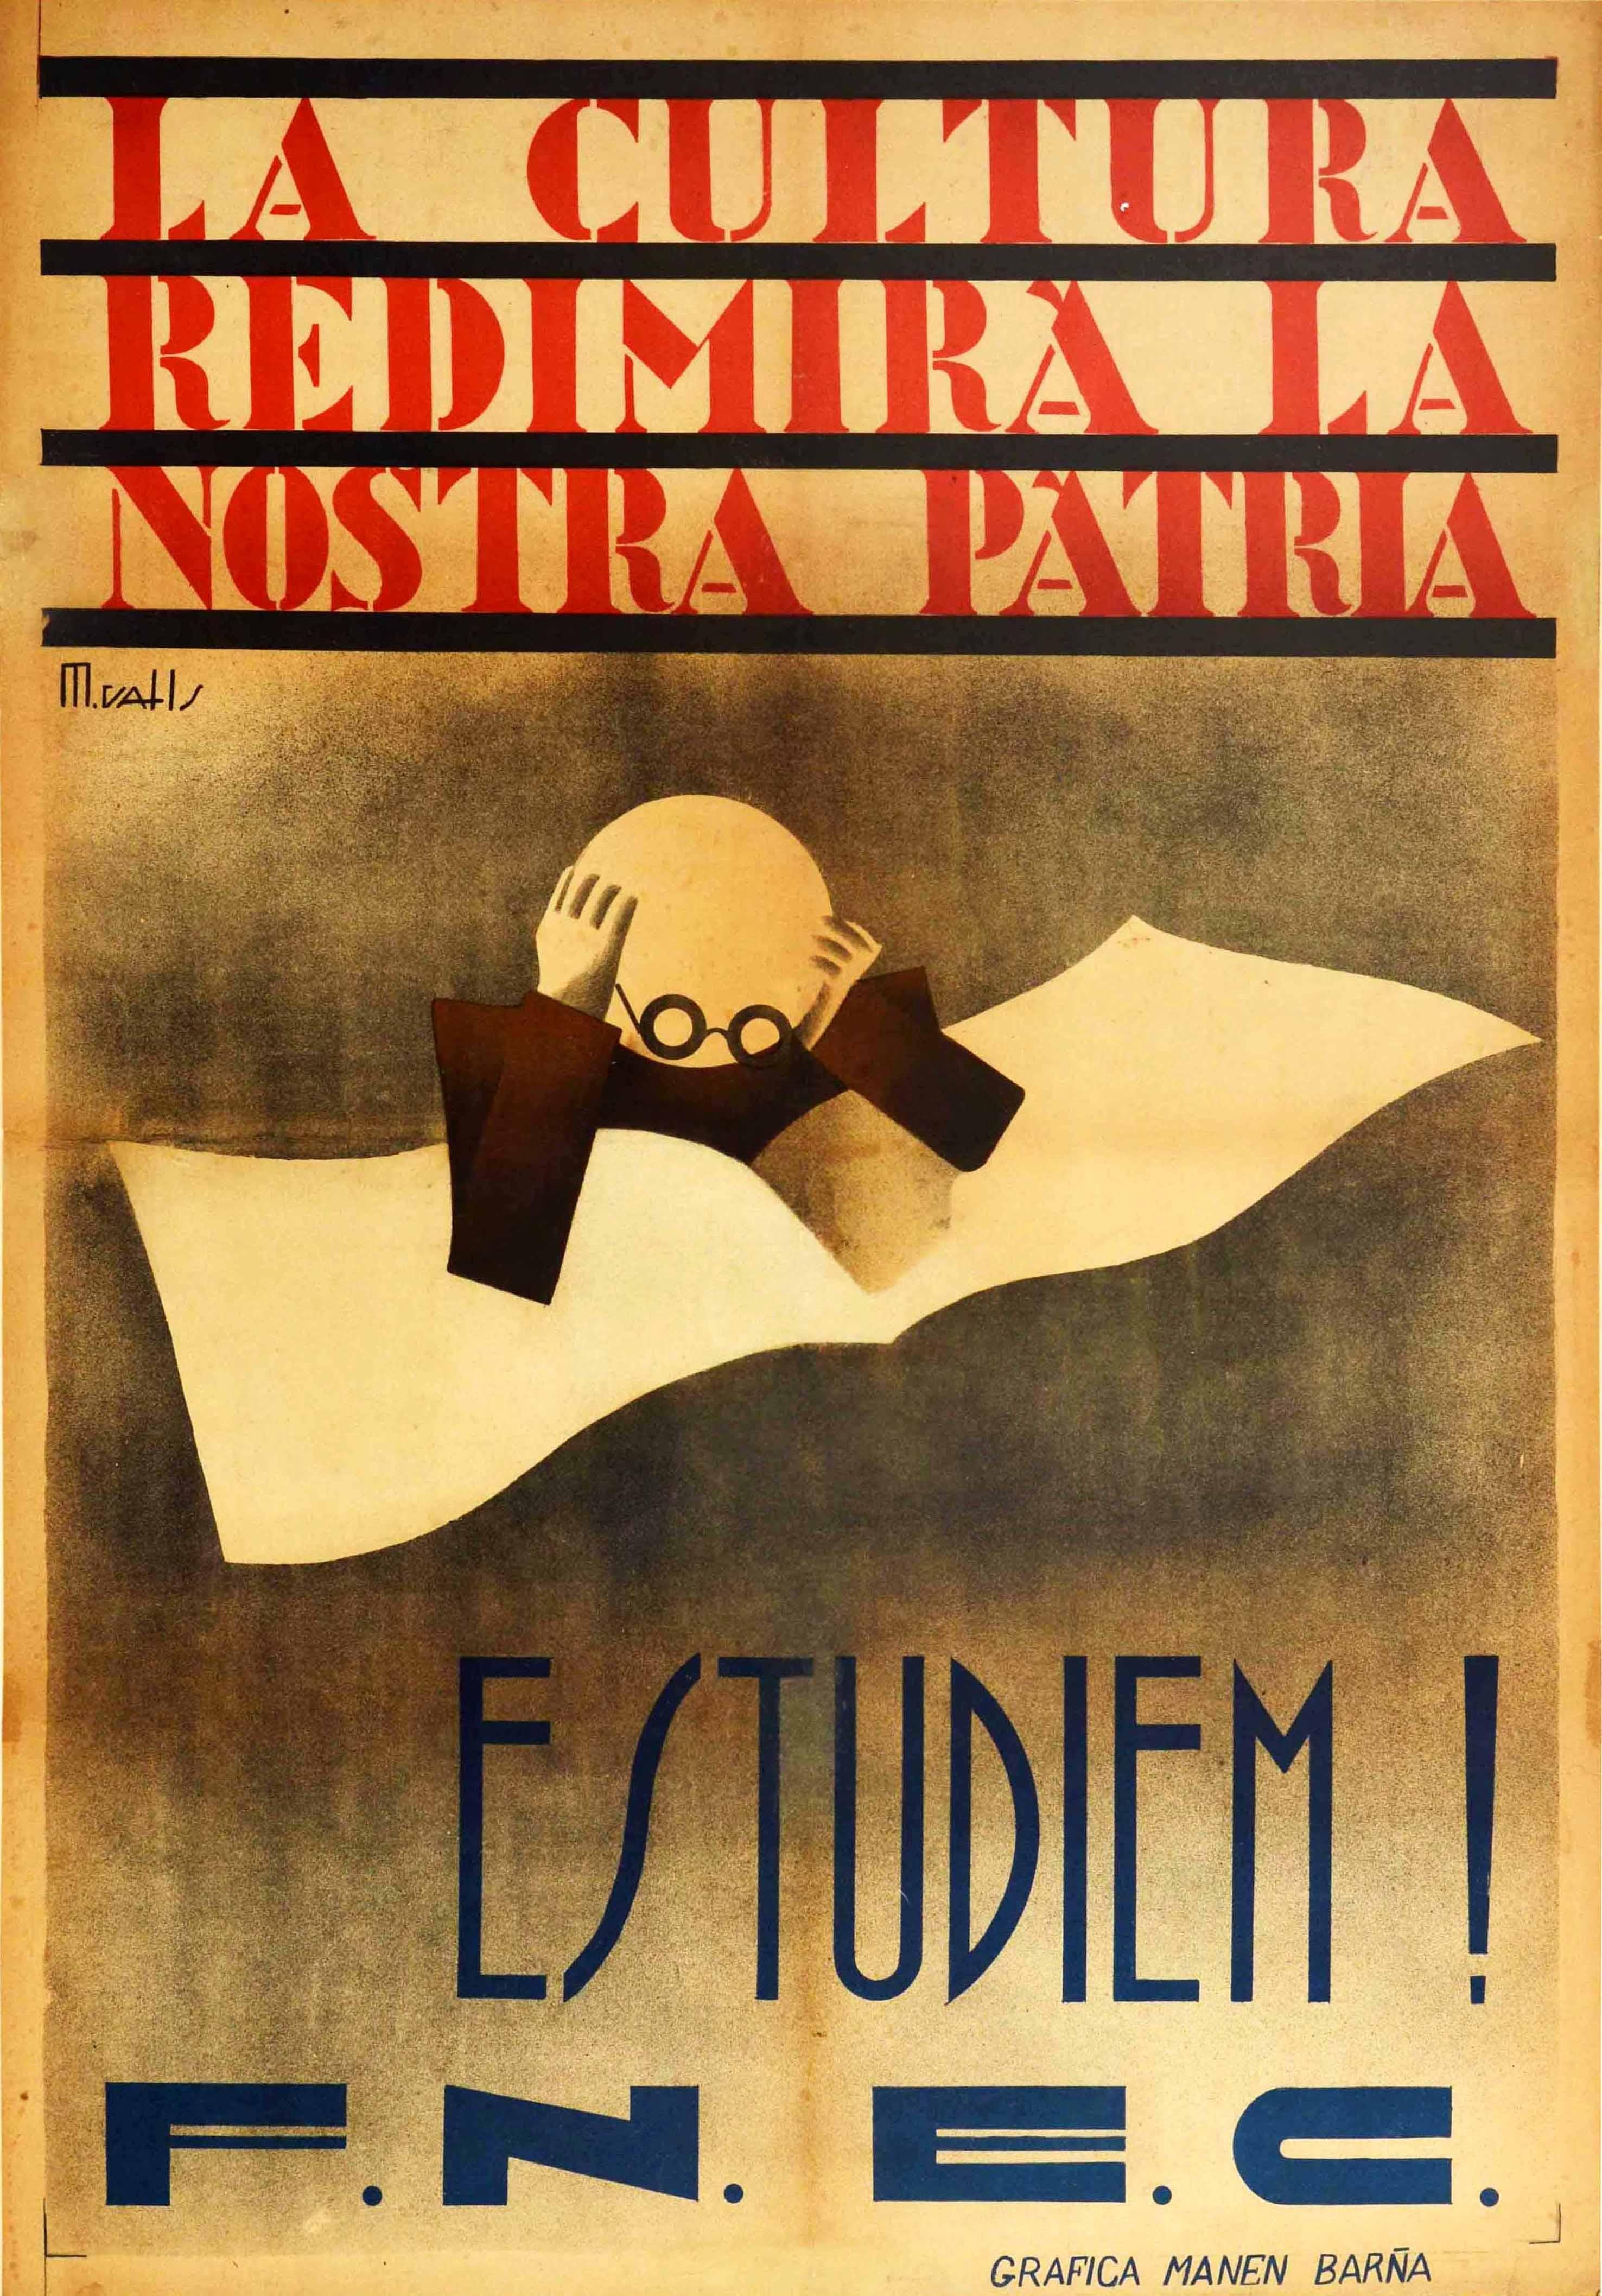 M. Valls Print - Original Vintage Poster Student Culture Our Homeland Let's Study Civil War Spain